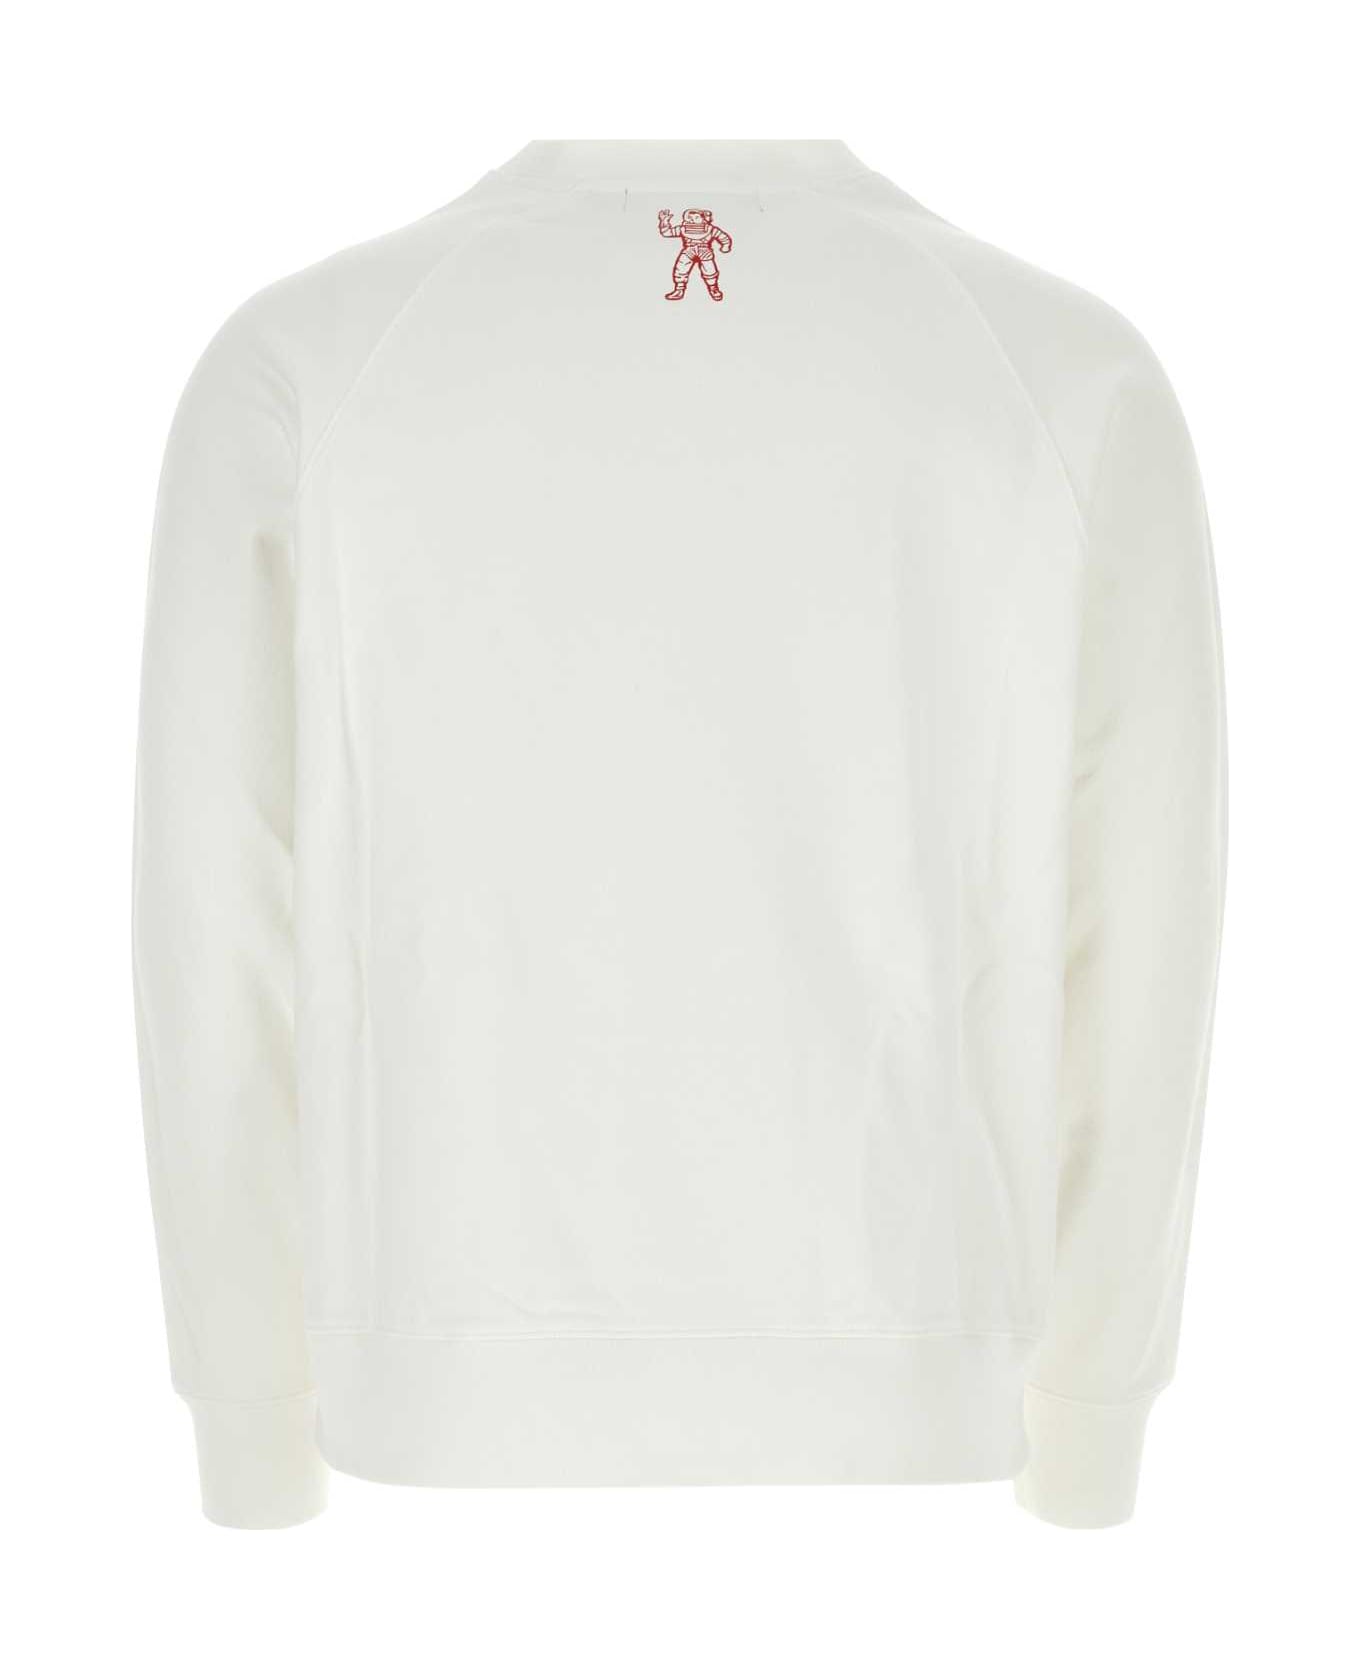 Billionaire Boys Club White Cotton Sweatshirt - WHITE